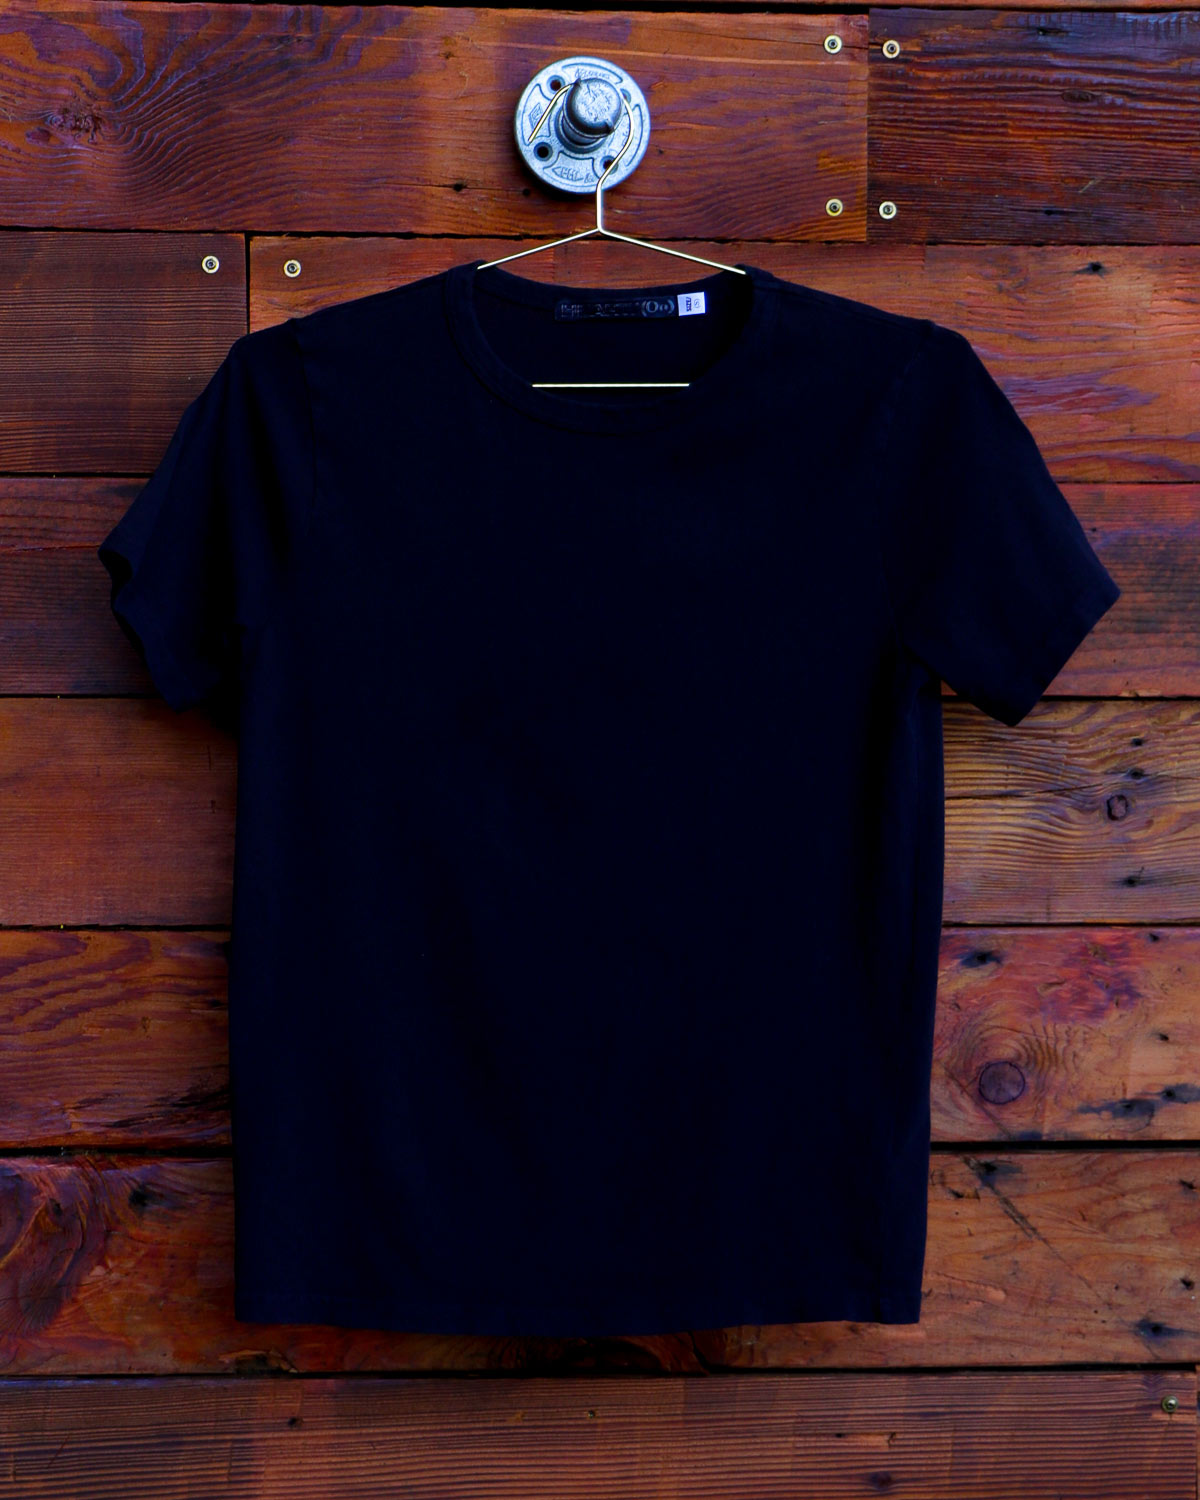 Black t-shirt hanging on wood wall